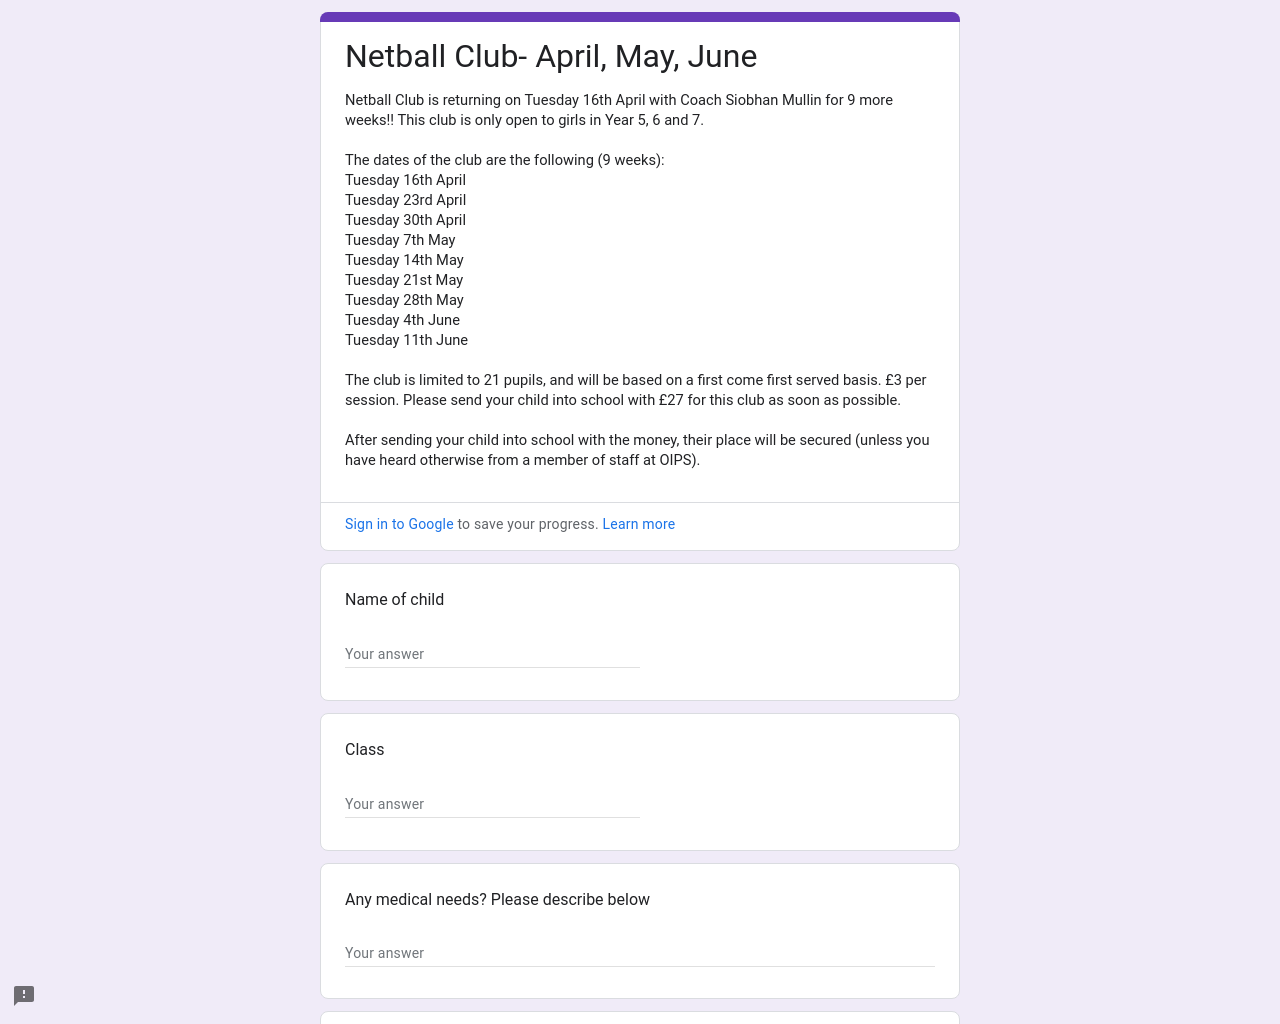 Netball- Year 5, 6 and 7 GIRLS- April, May, June